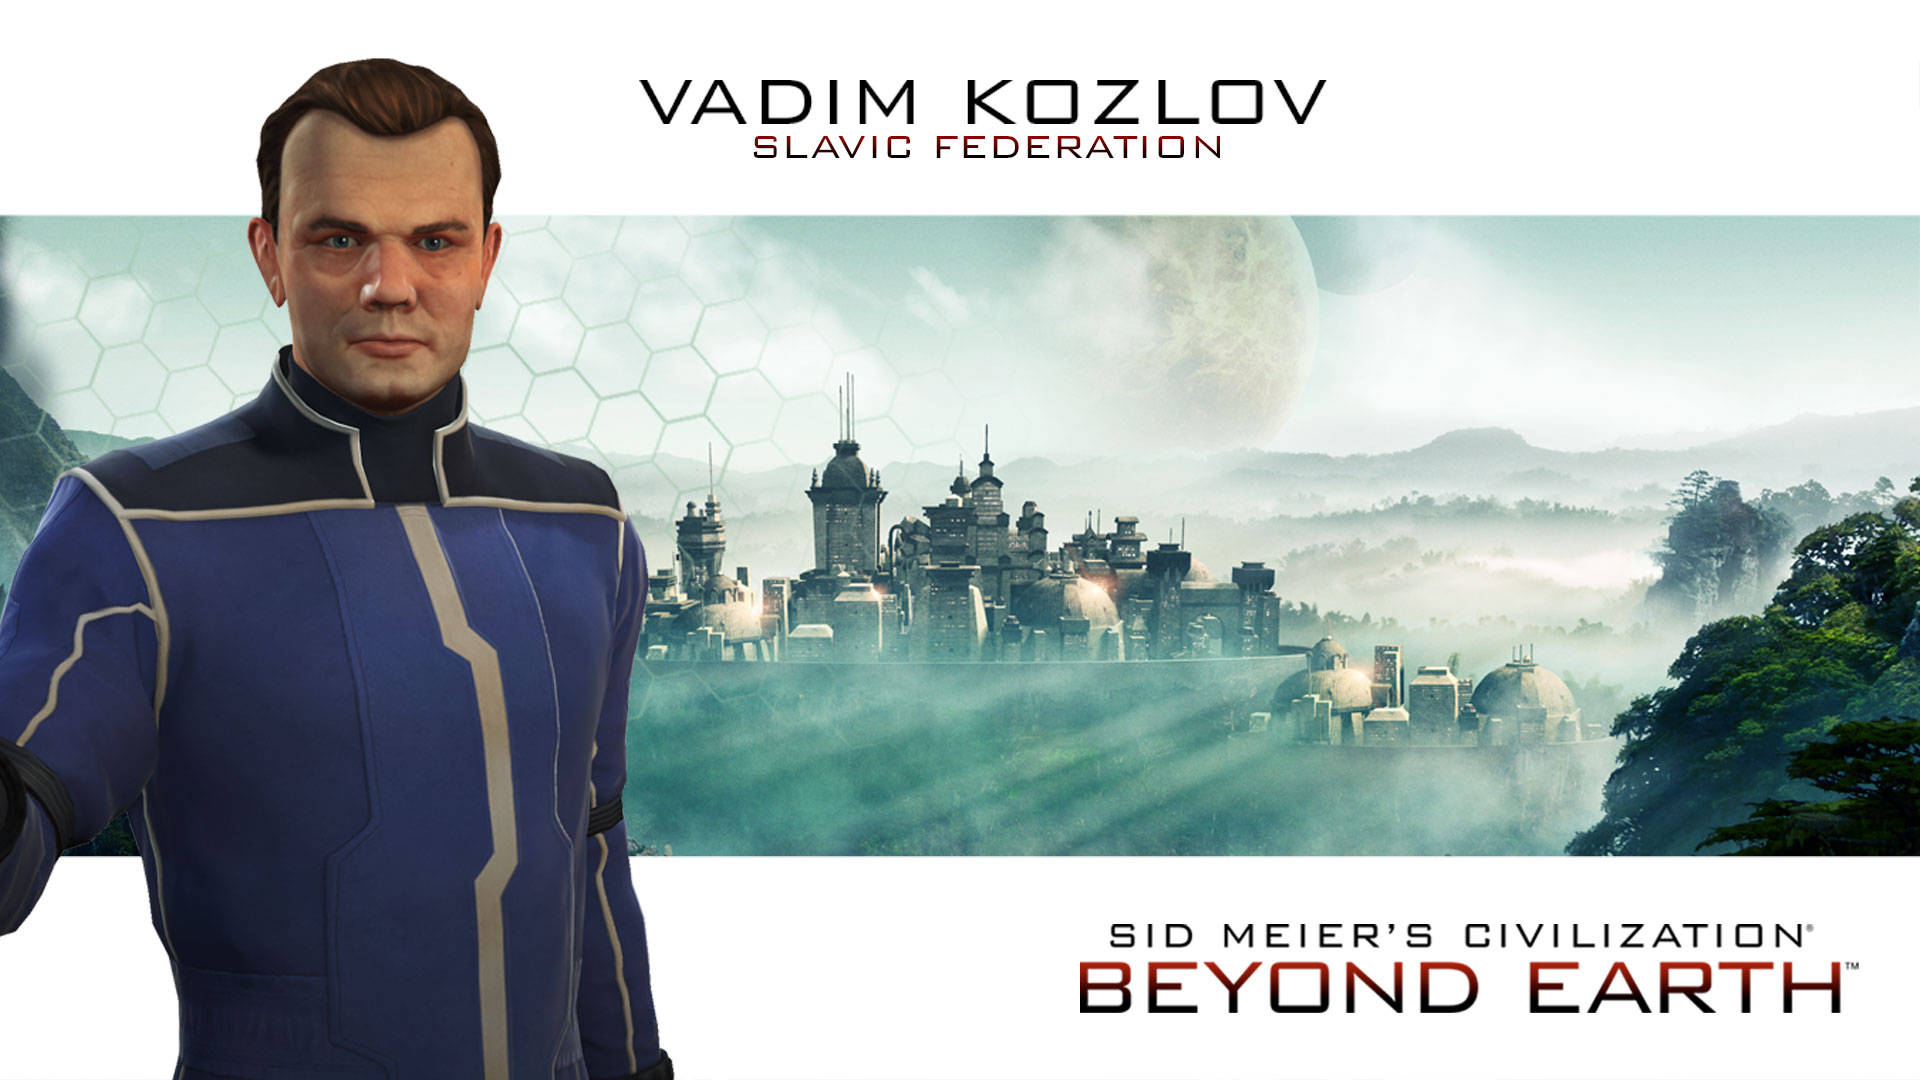 Vadim Kozlov Civilization Beyond Earth Wallpaper